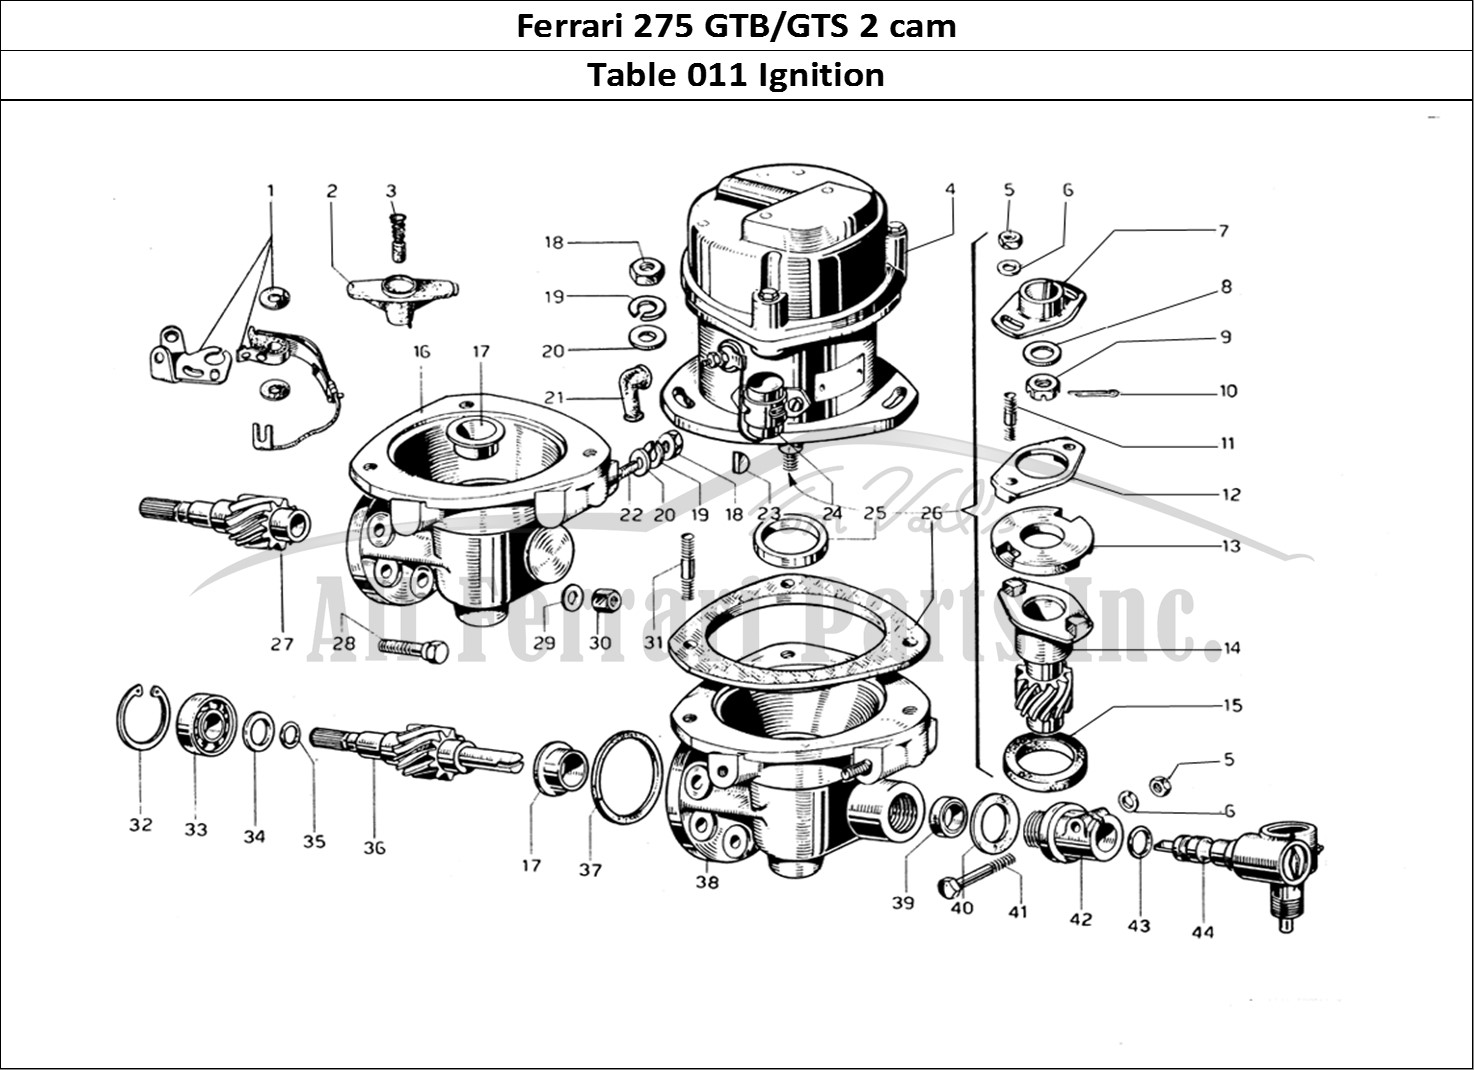 Ferrari Parts Ferrari 275 GTB/GTS 2 cam Page 011 Engine Ignition